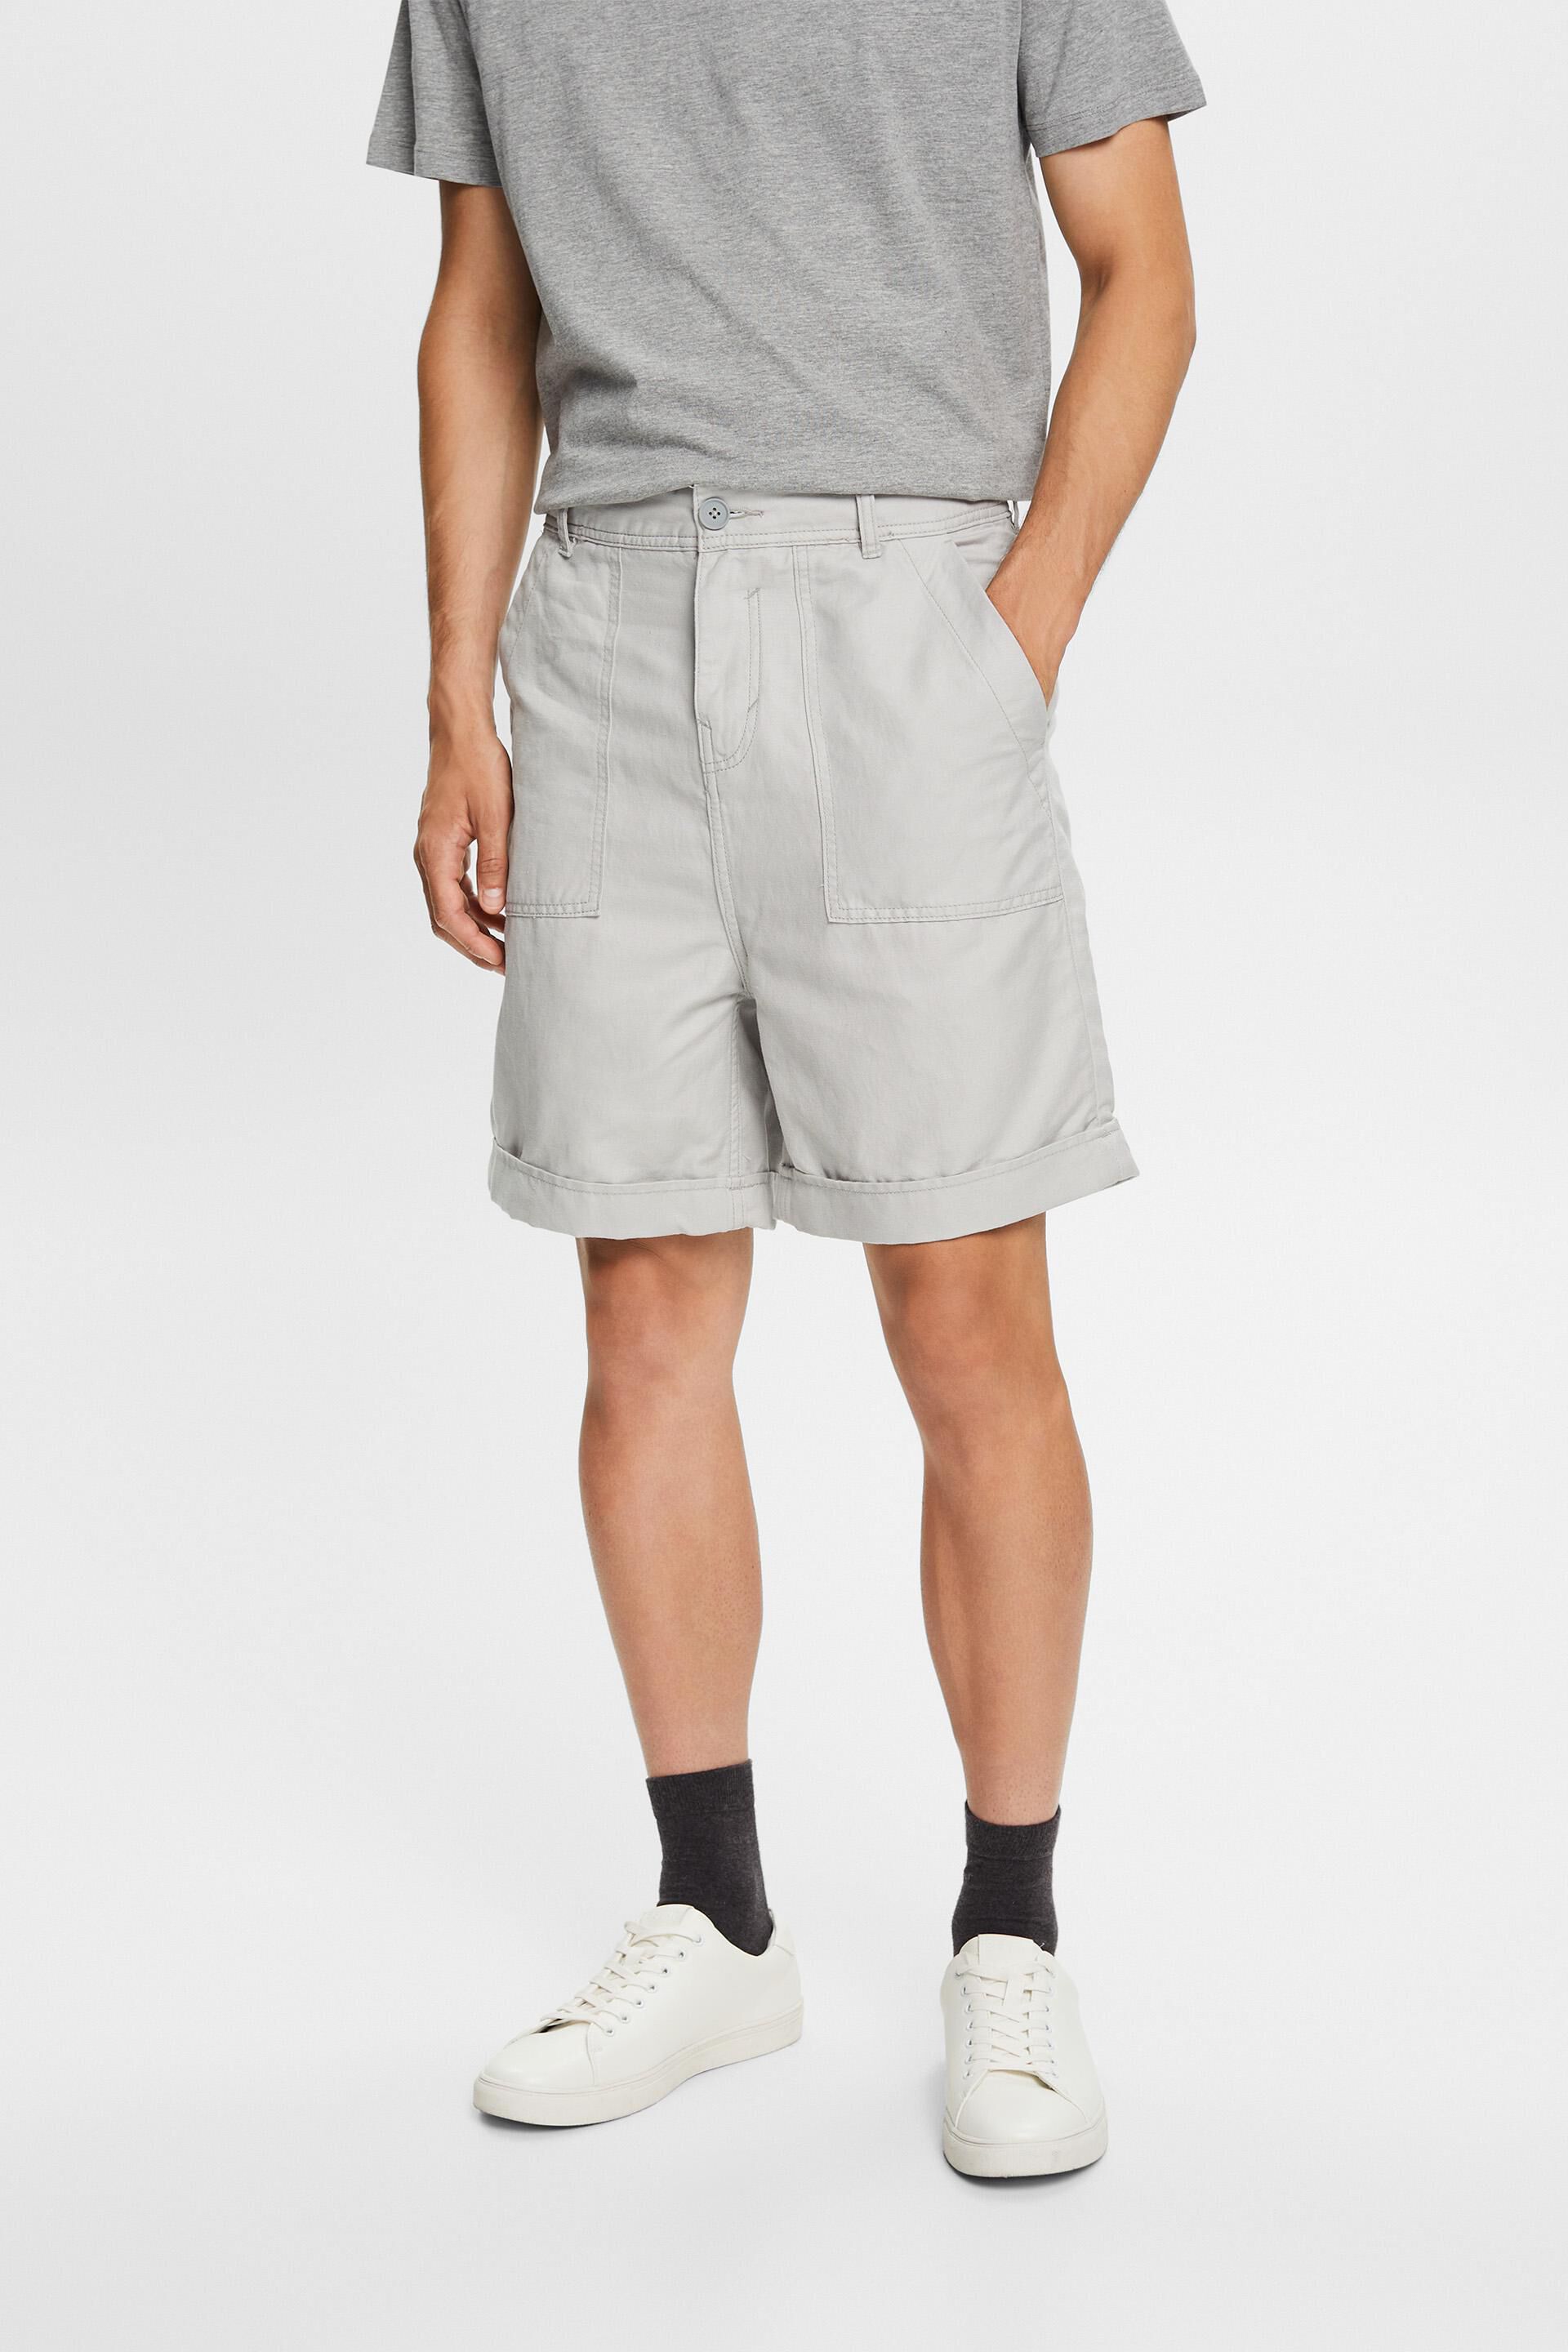 Esprit Bermuda shorts, blend cotton-linen